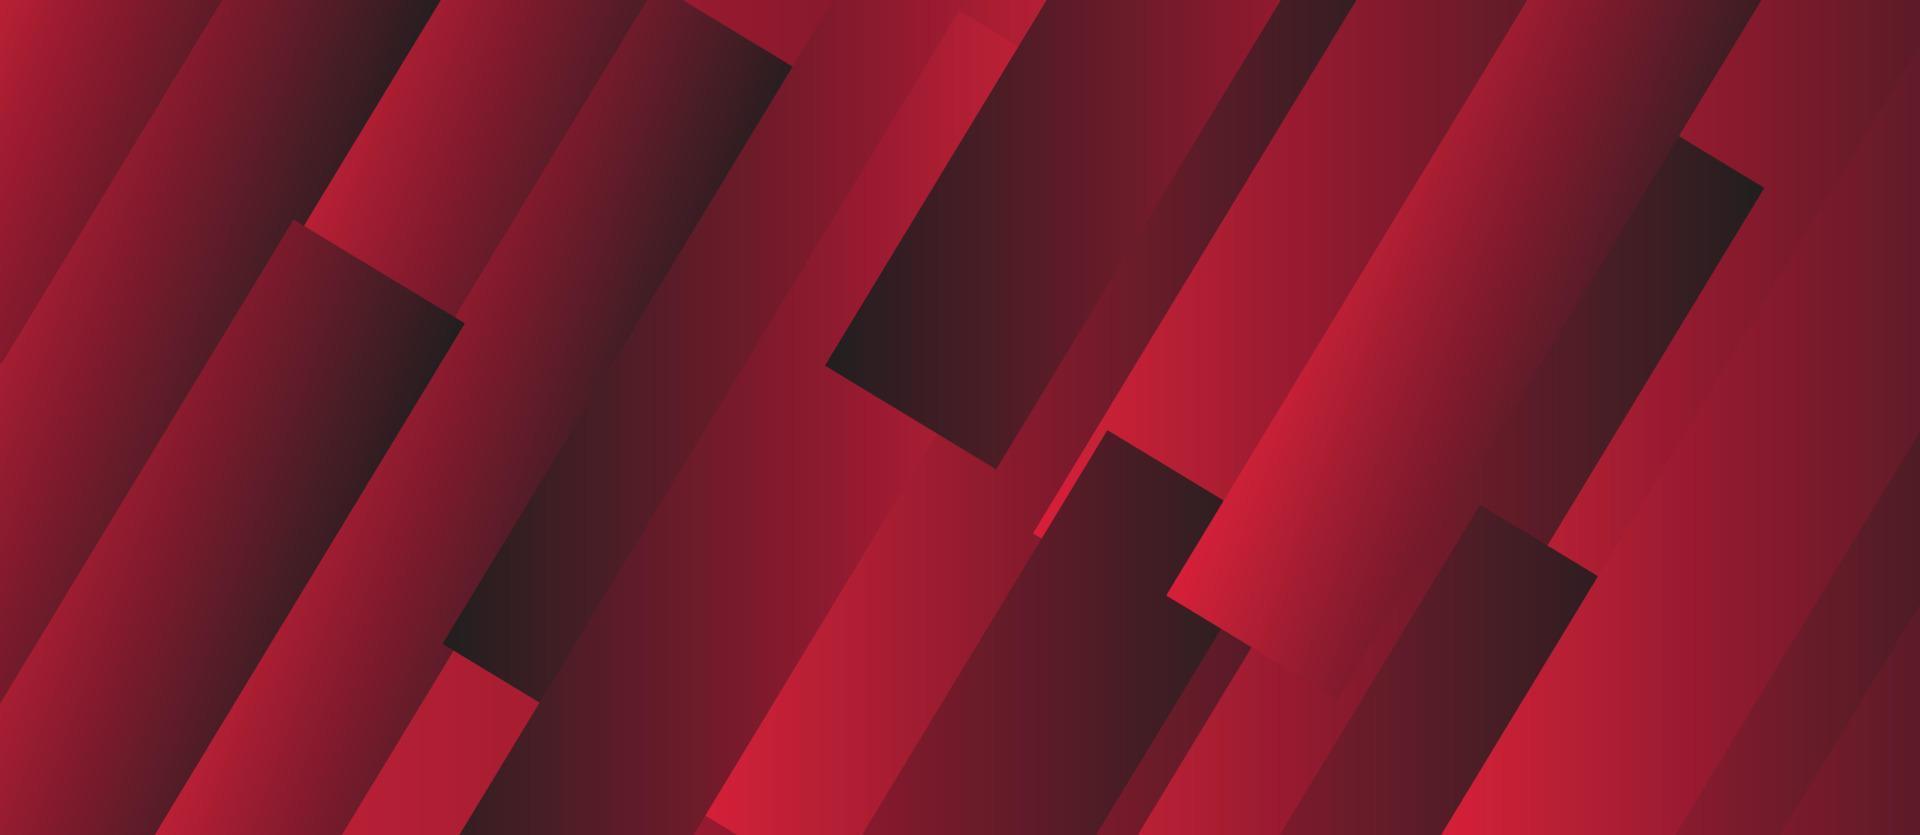 modern rood abstract achtergrond. schaduw van rood abstract achtergrond. helder rood abstract blanco papier ontwerp achtergrond vector